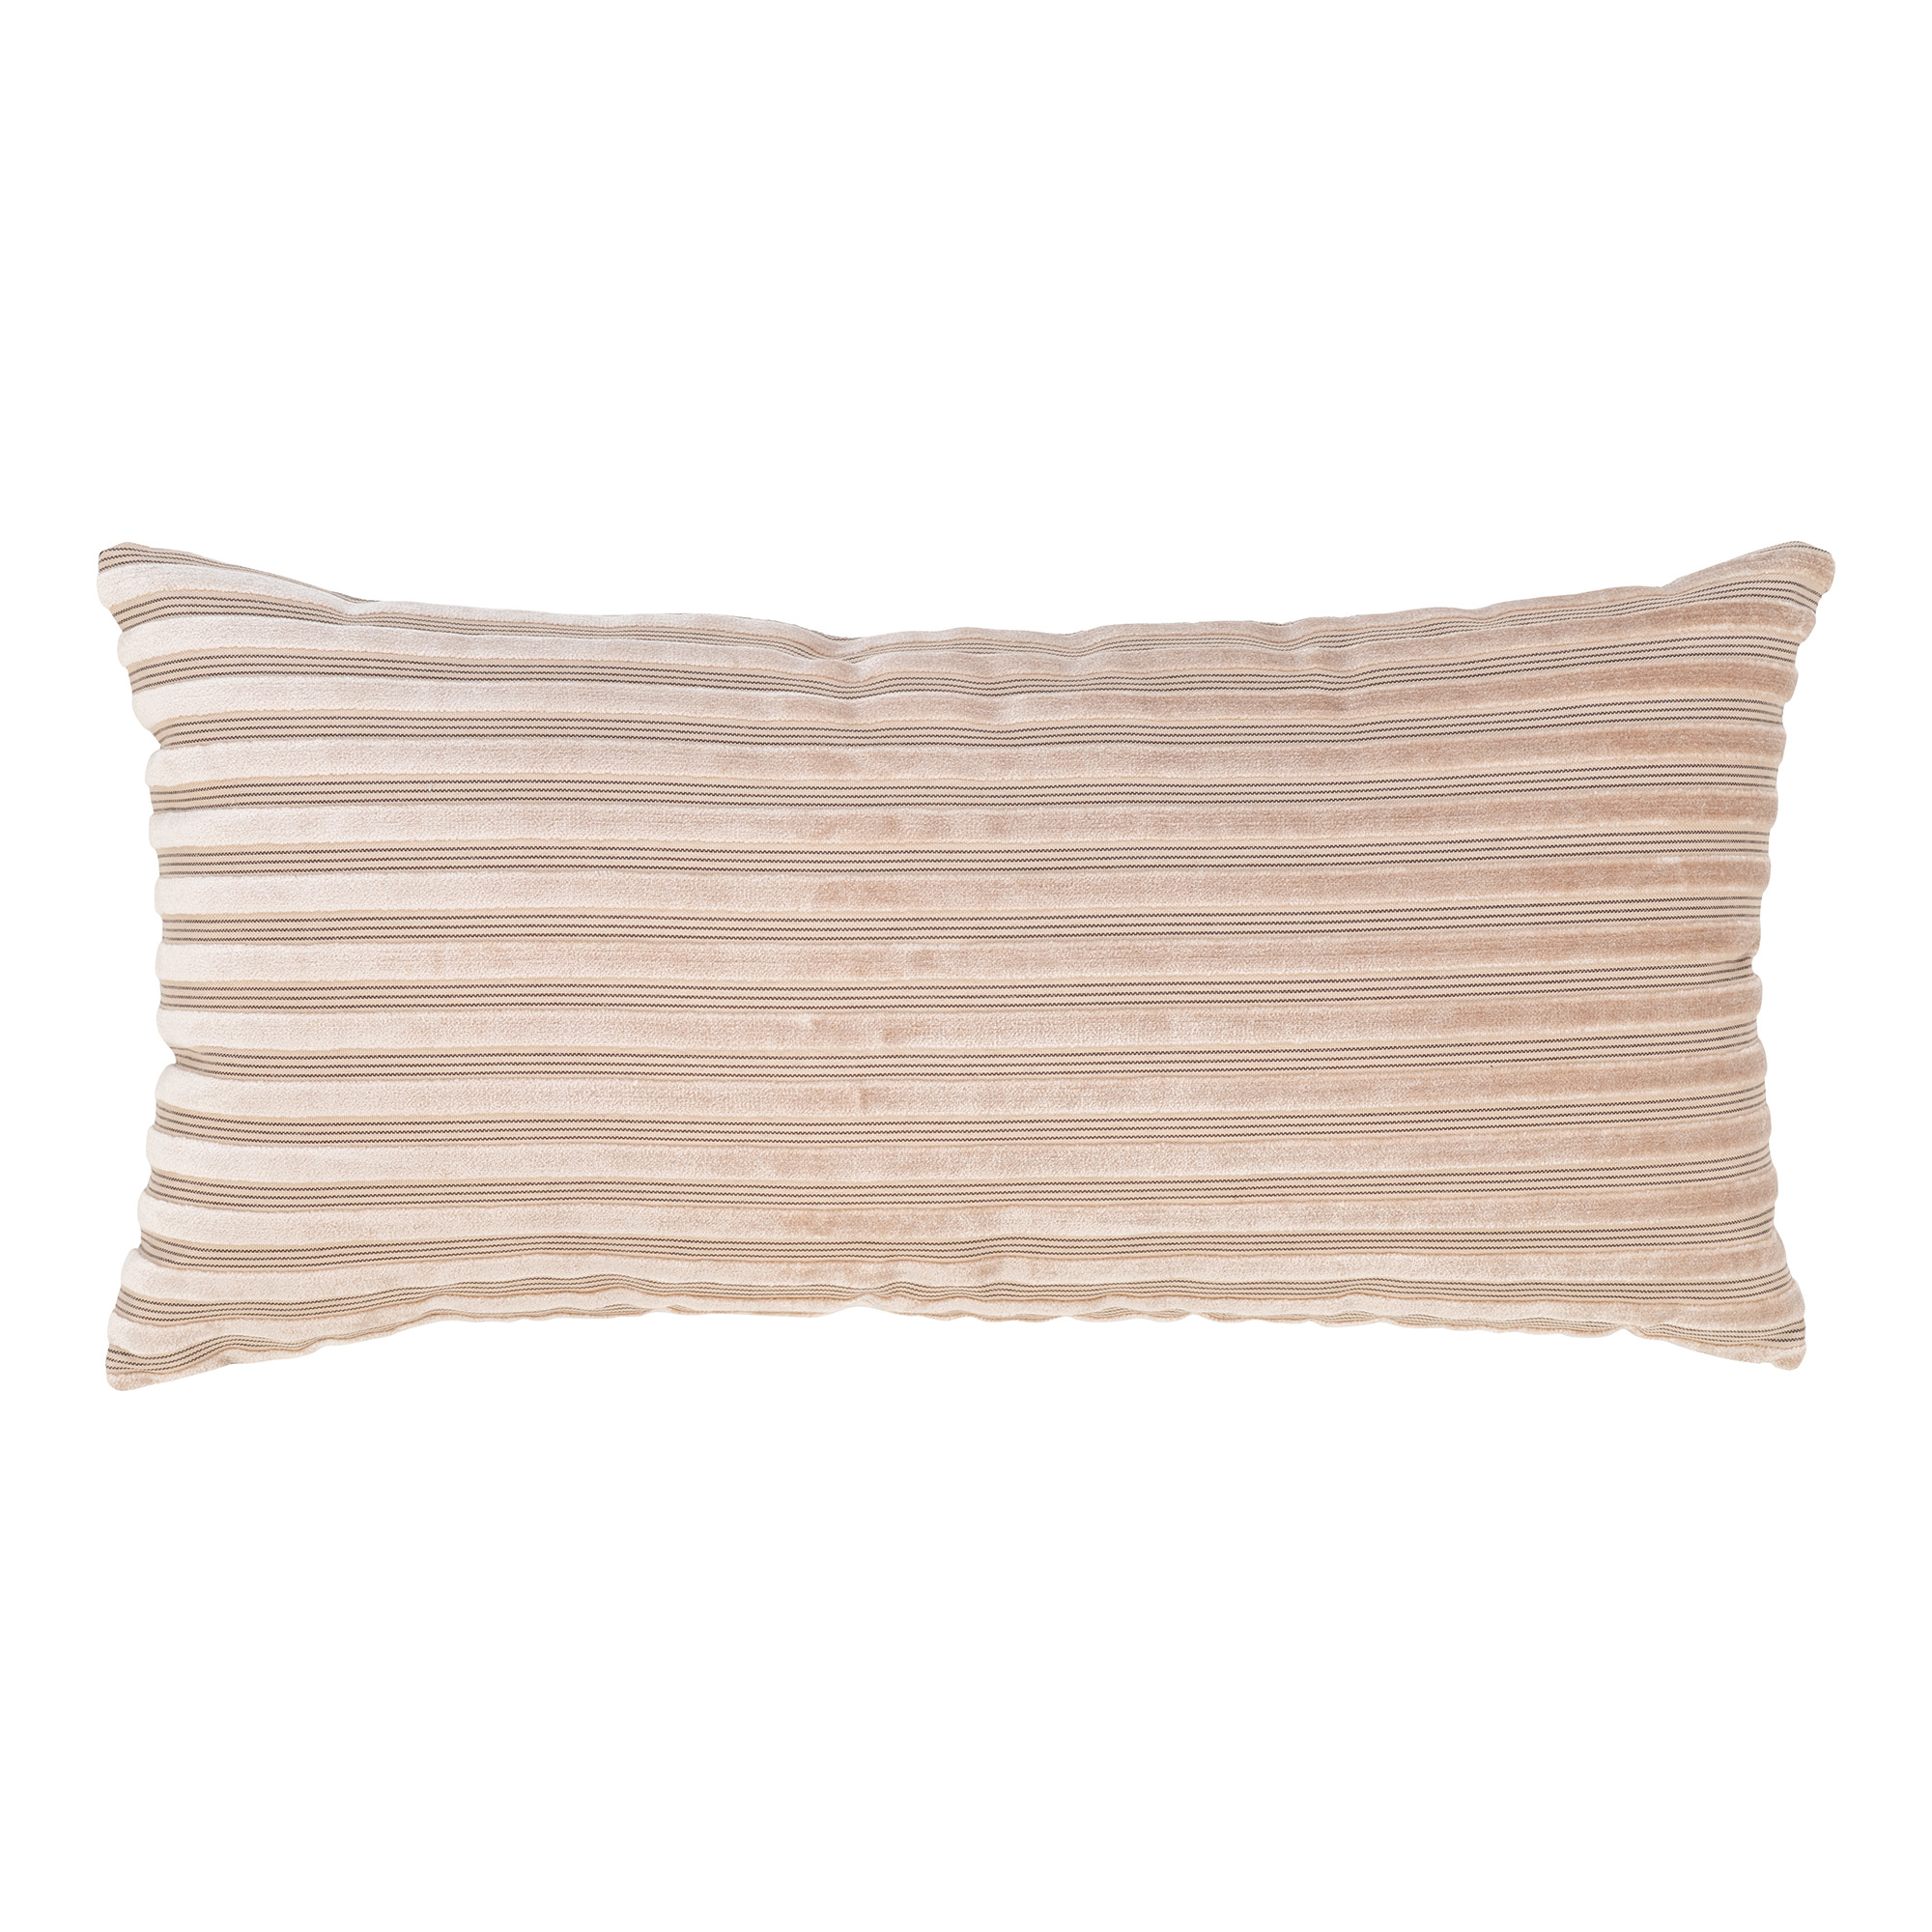 HOUSE NORDIC Alburry pude, rektangulær - beige viskose/polyester stof (30x60)